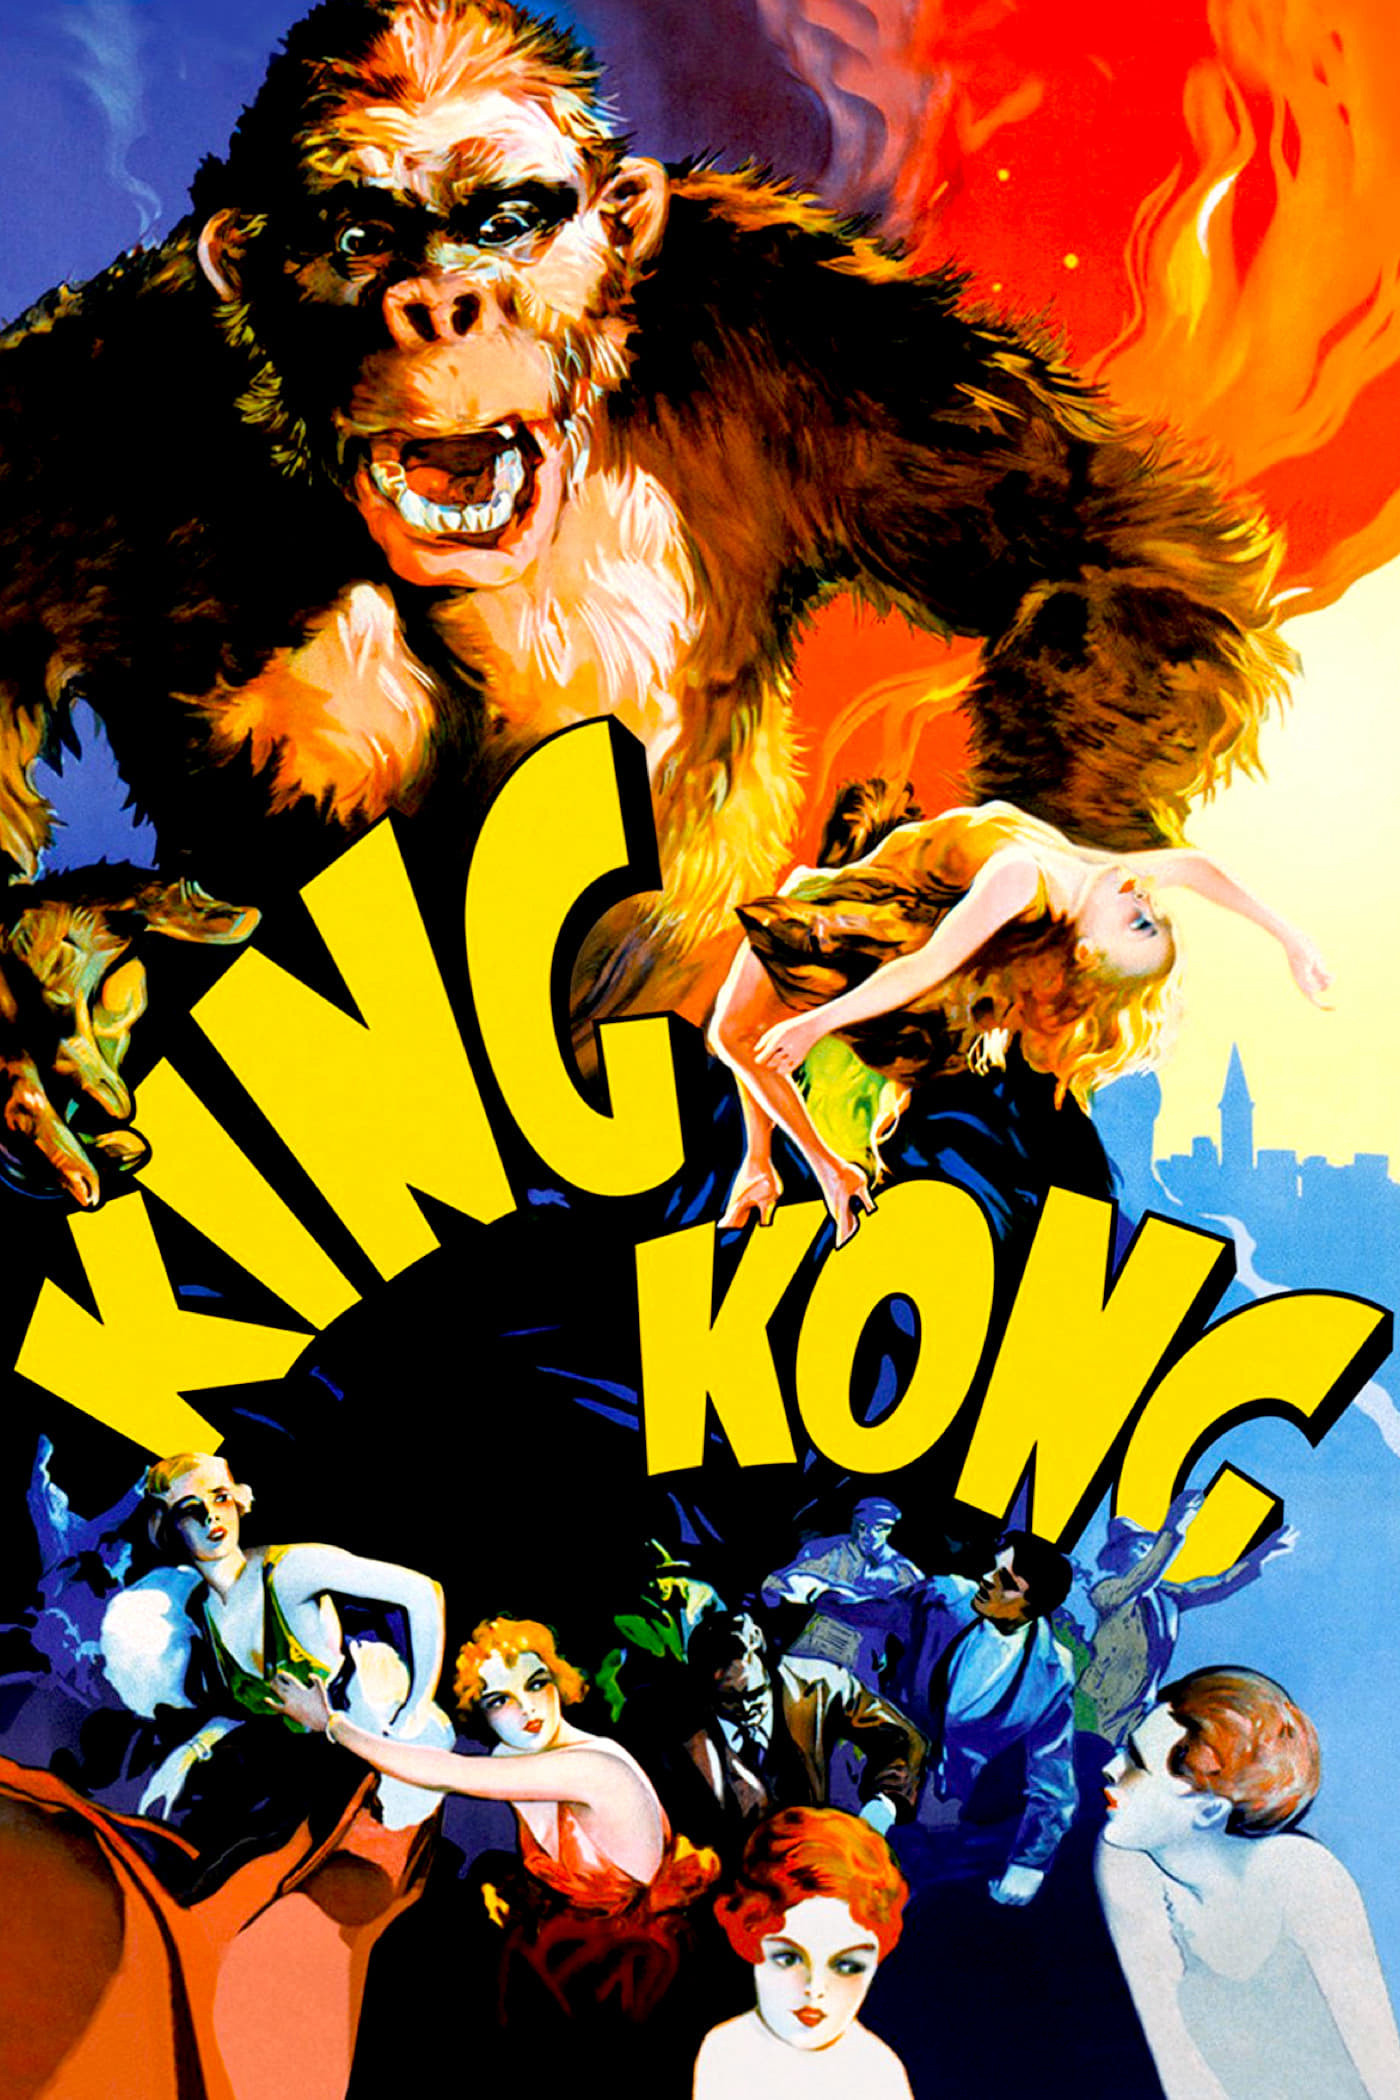 King Kong (King Kong) [2005]